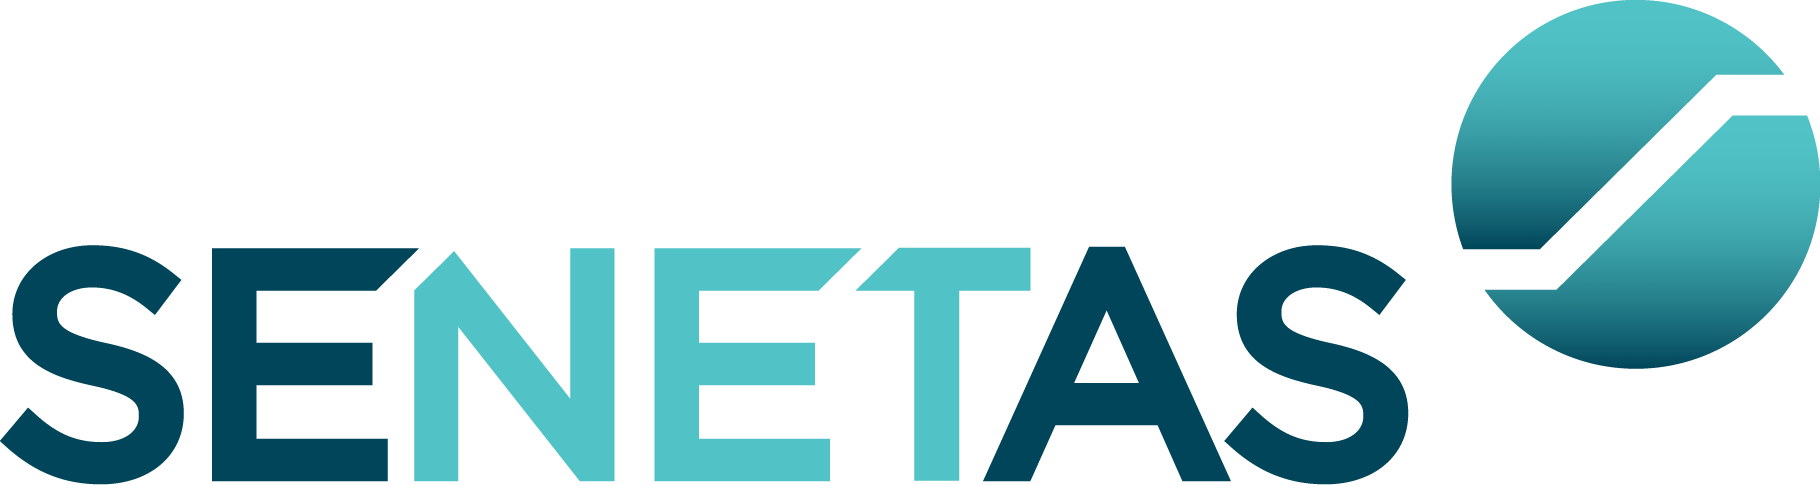 Senetas Corporation Limited (SEN:ASX) logo